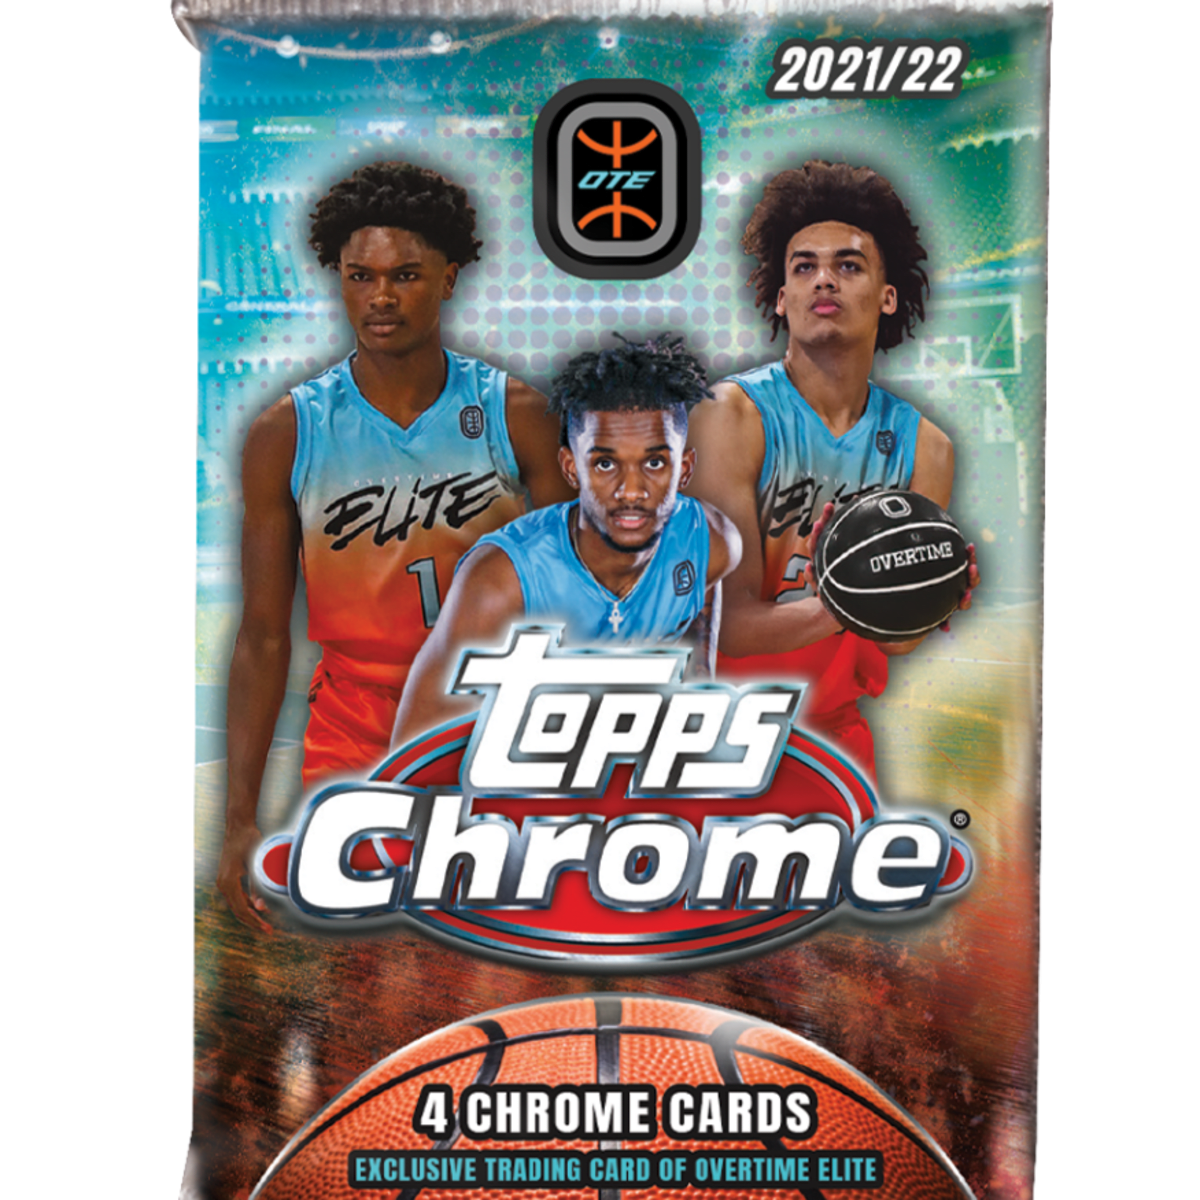 Topps releases first new Topps Chrome Basketball set under